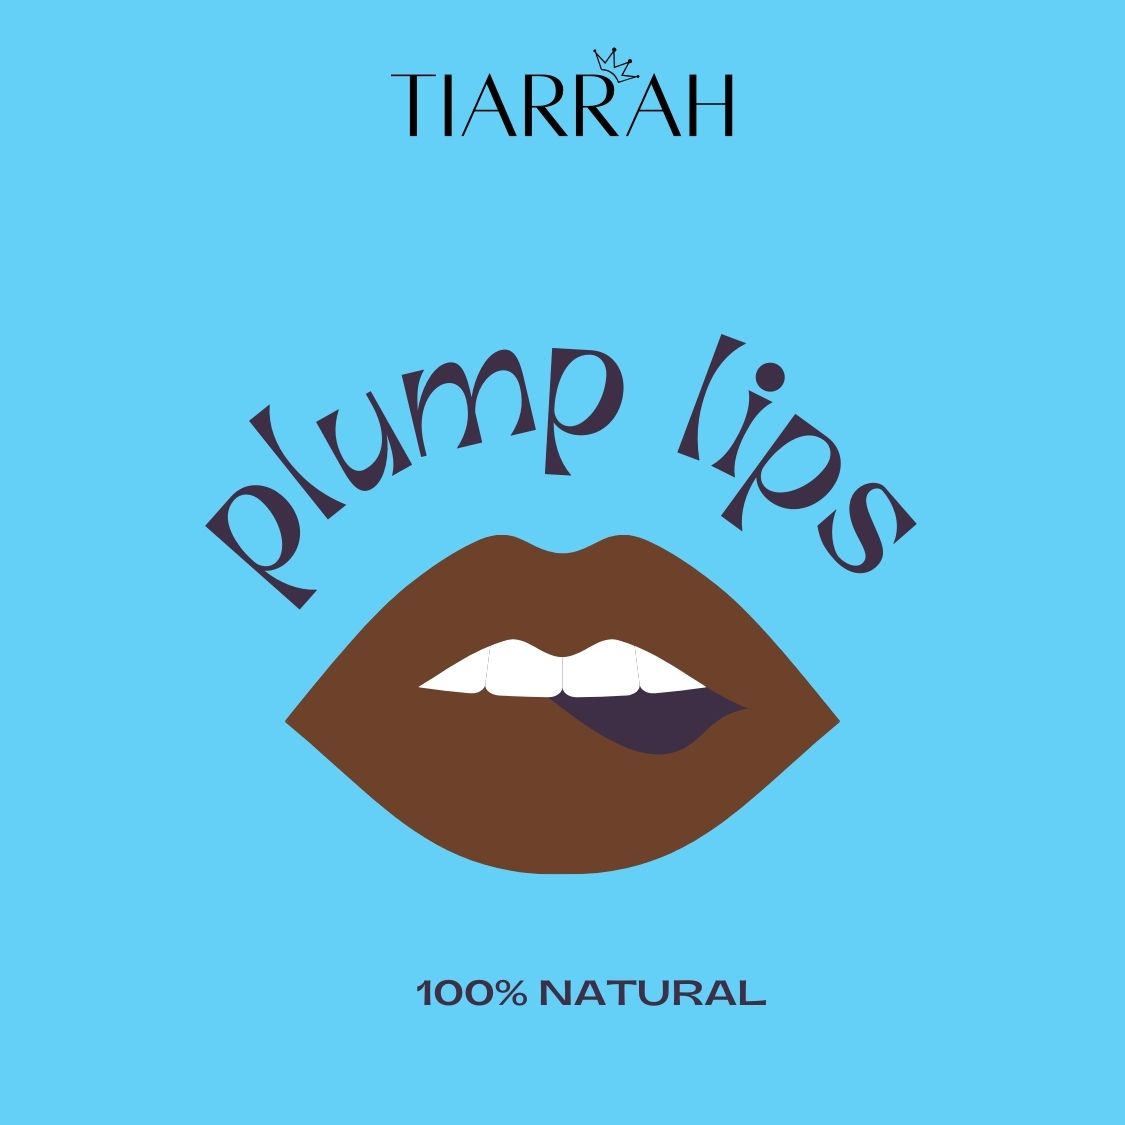 Tiarrah's Mocha Brown Tint: Natural & Non-Toxic - The Luxury Bath and Body Care Shop